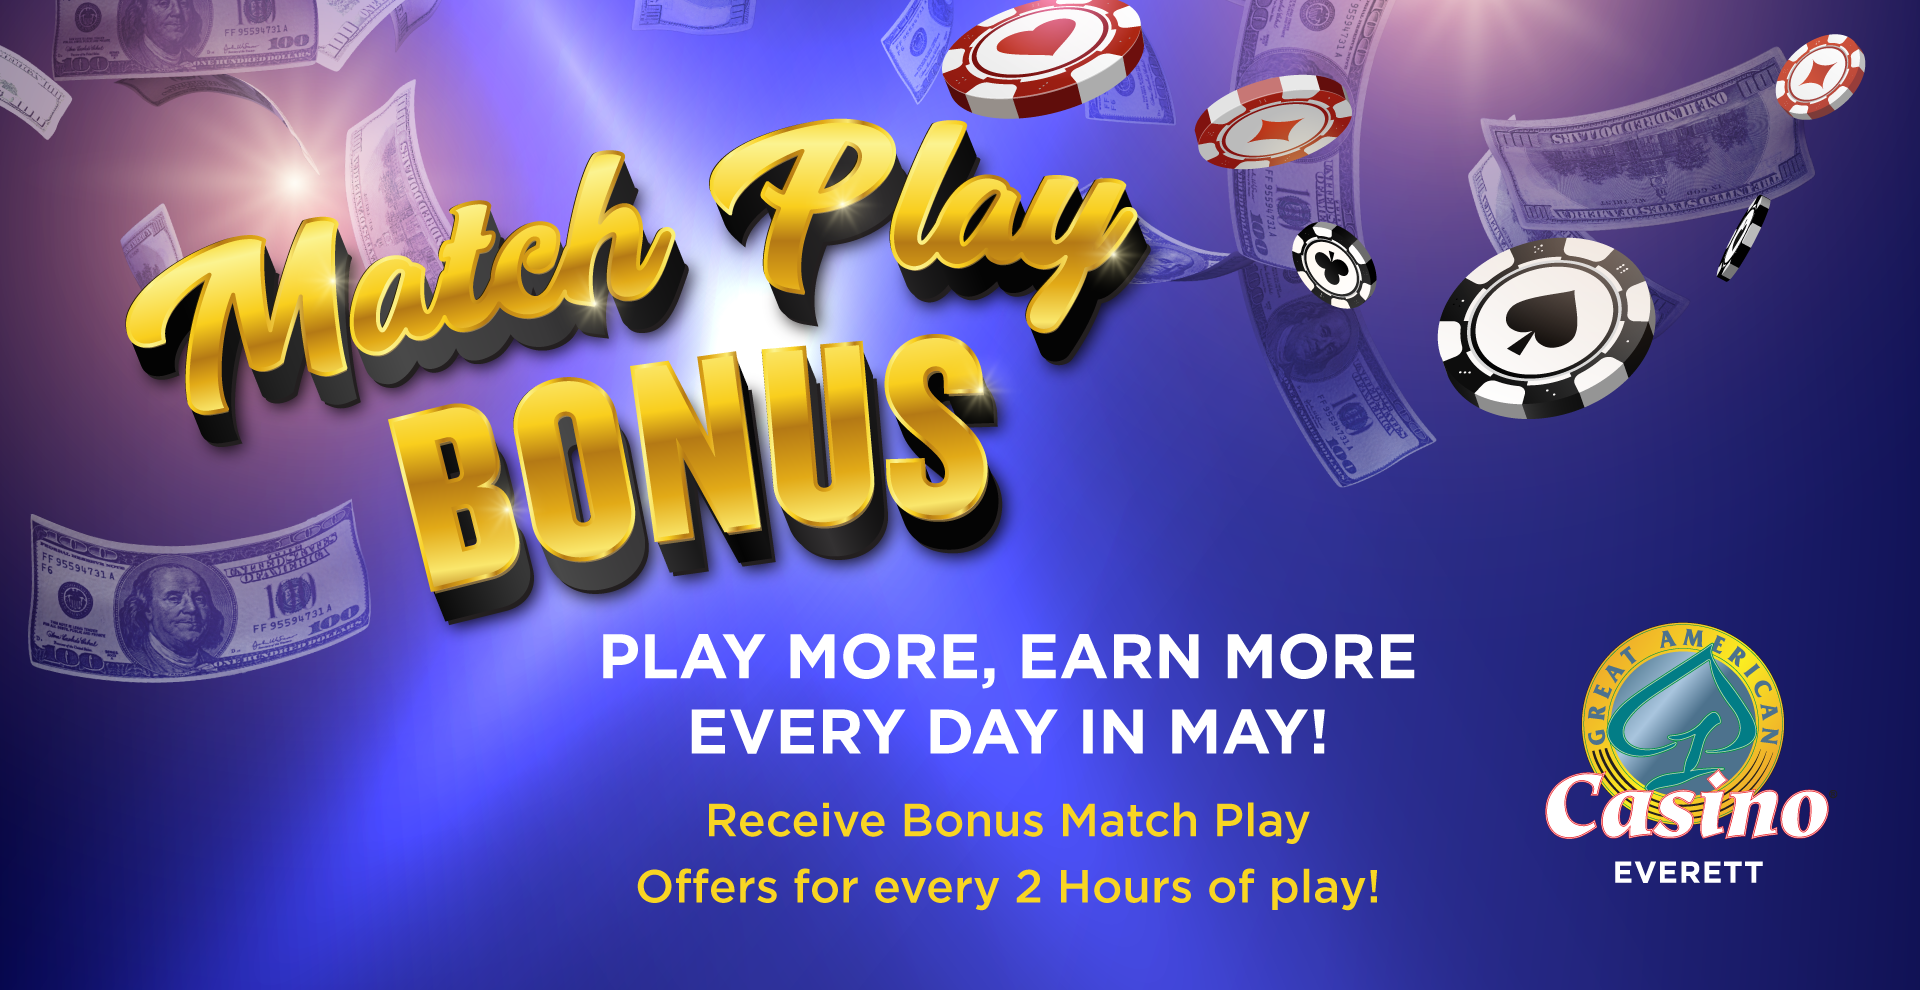 Great American Casino Everett | Match Play Bonus